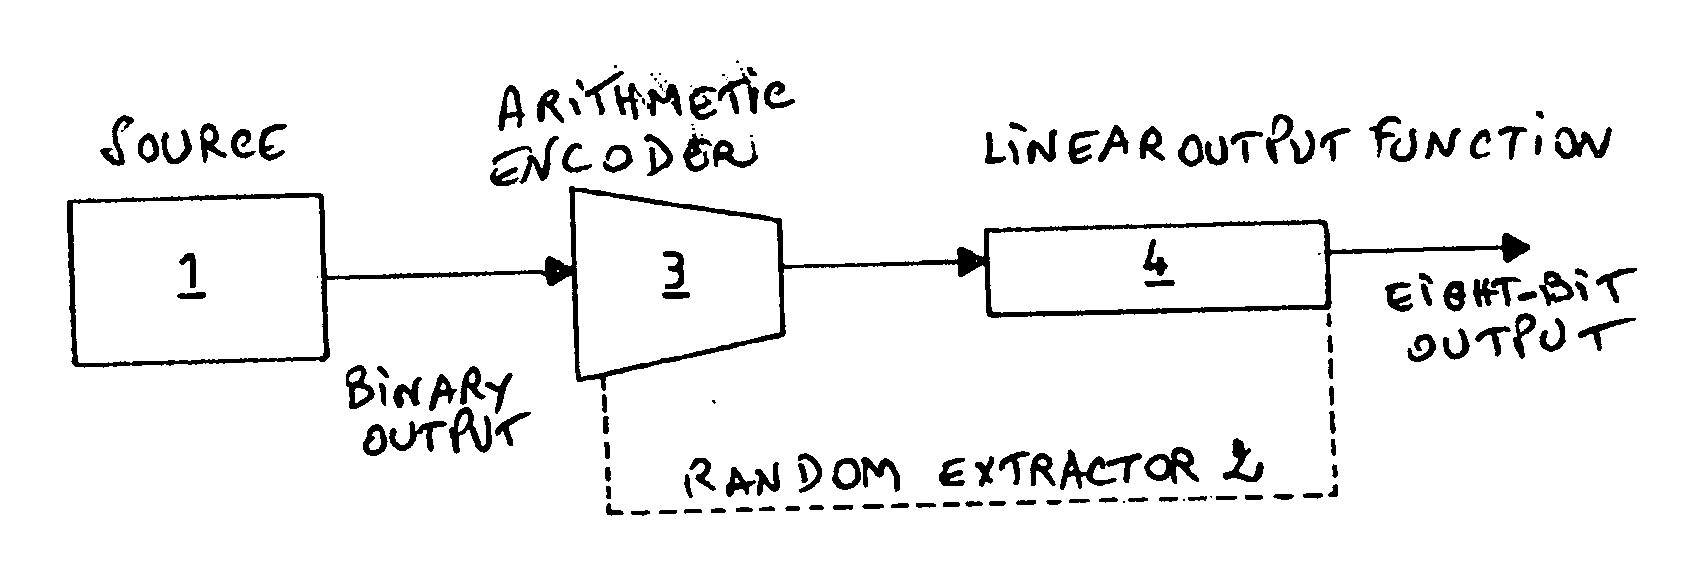 Digital random generator based on an arithmetic compressor